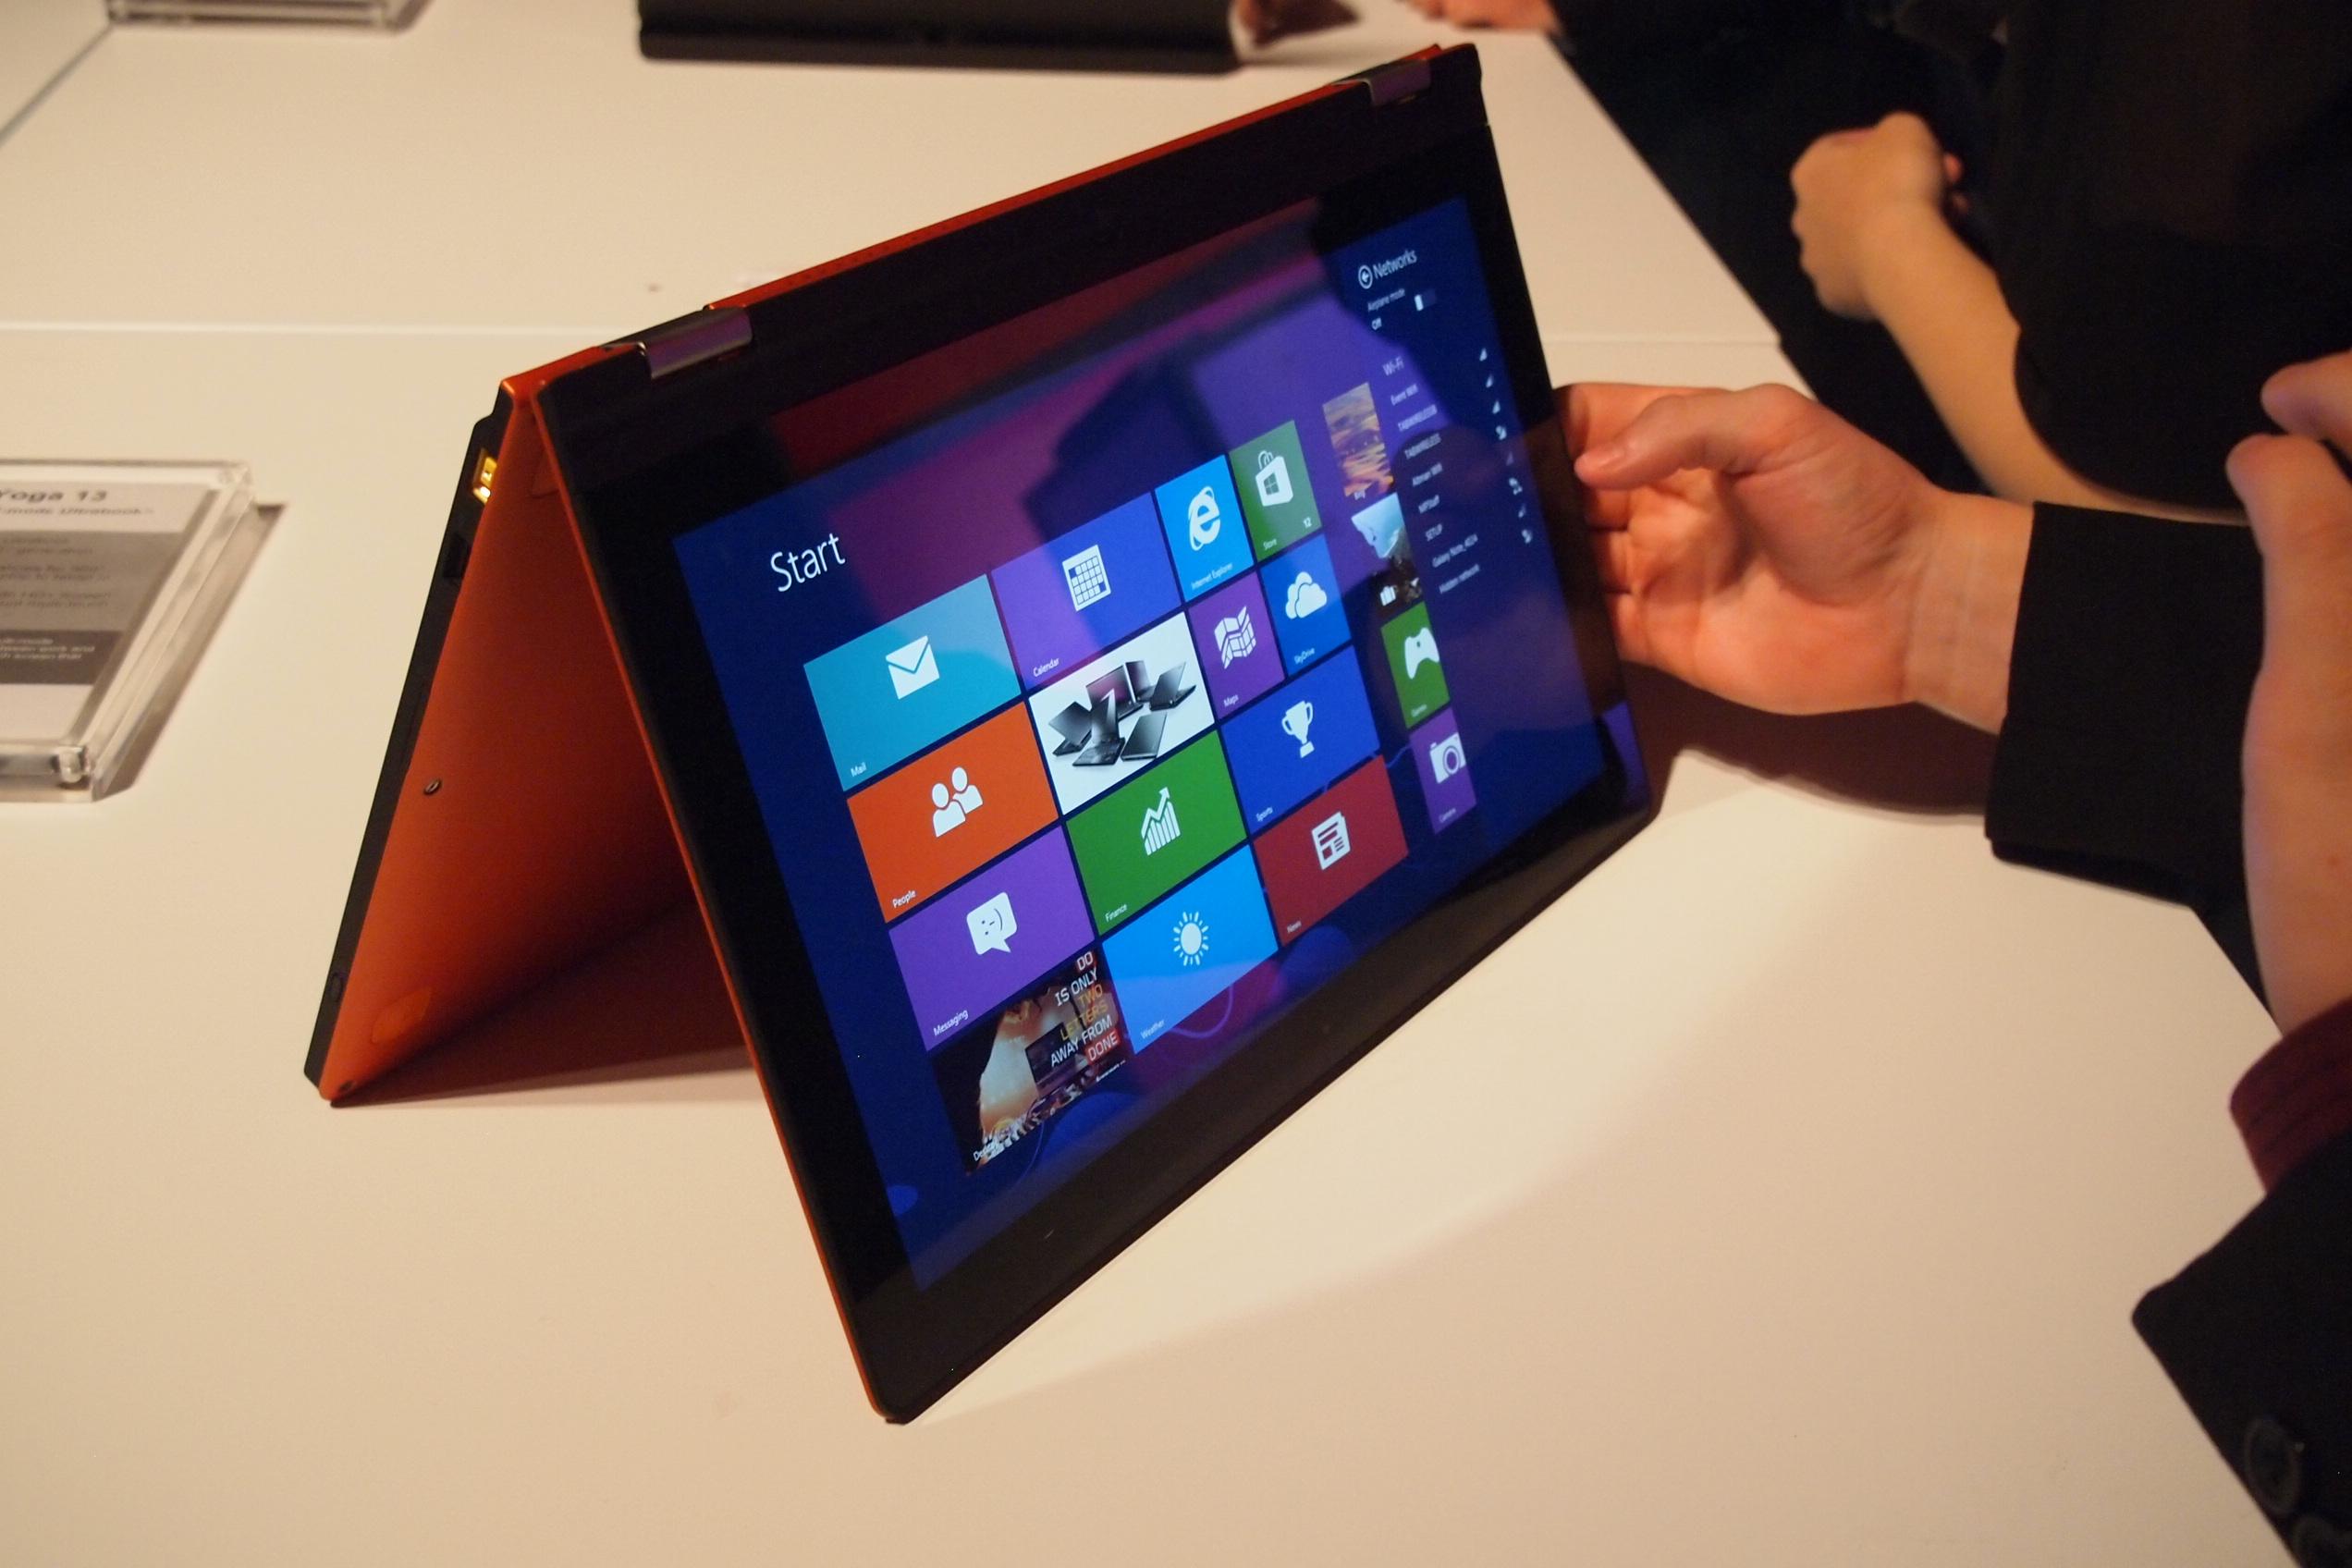 Lenovo Windows 8 Tablet Laptop